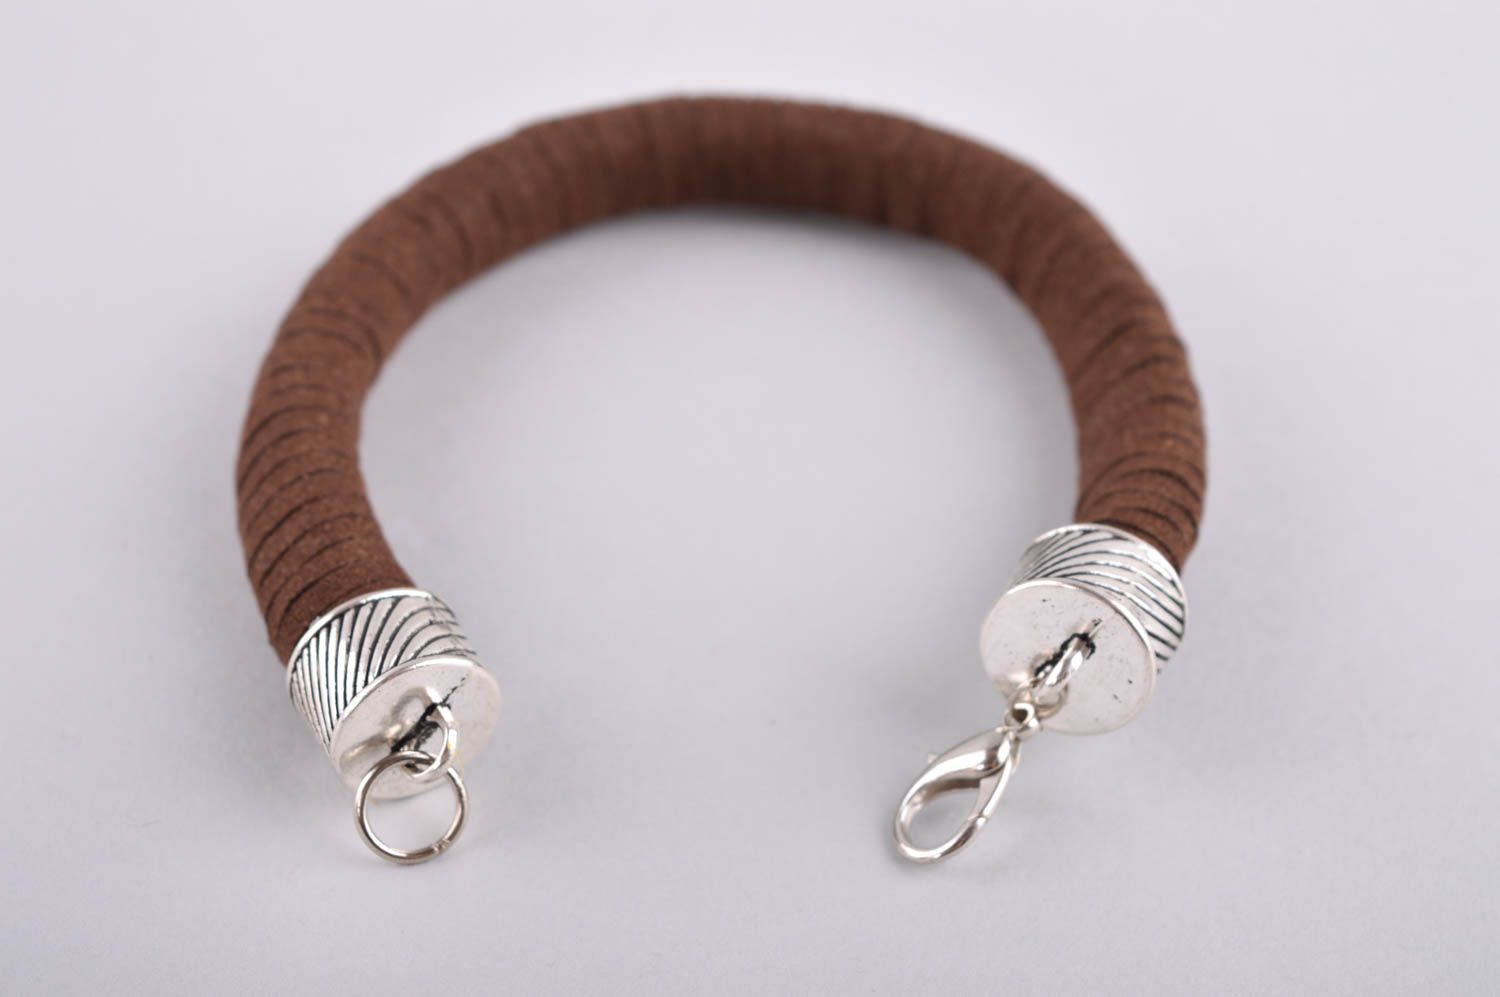 Handmade leather bracelet stylish accessory fashion jewelry leather jewelry photo 5